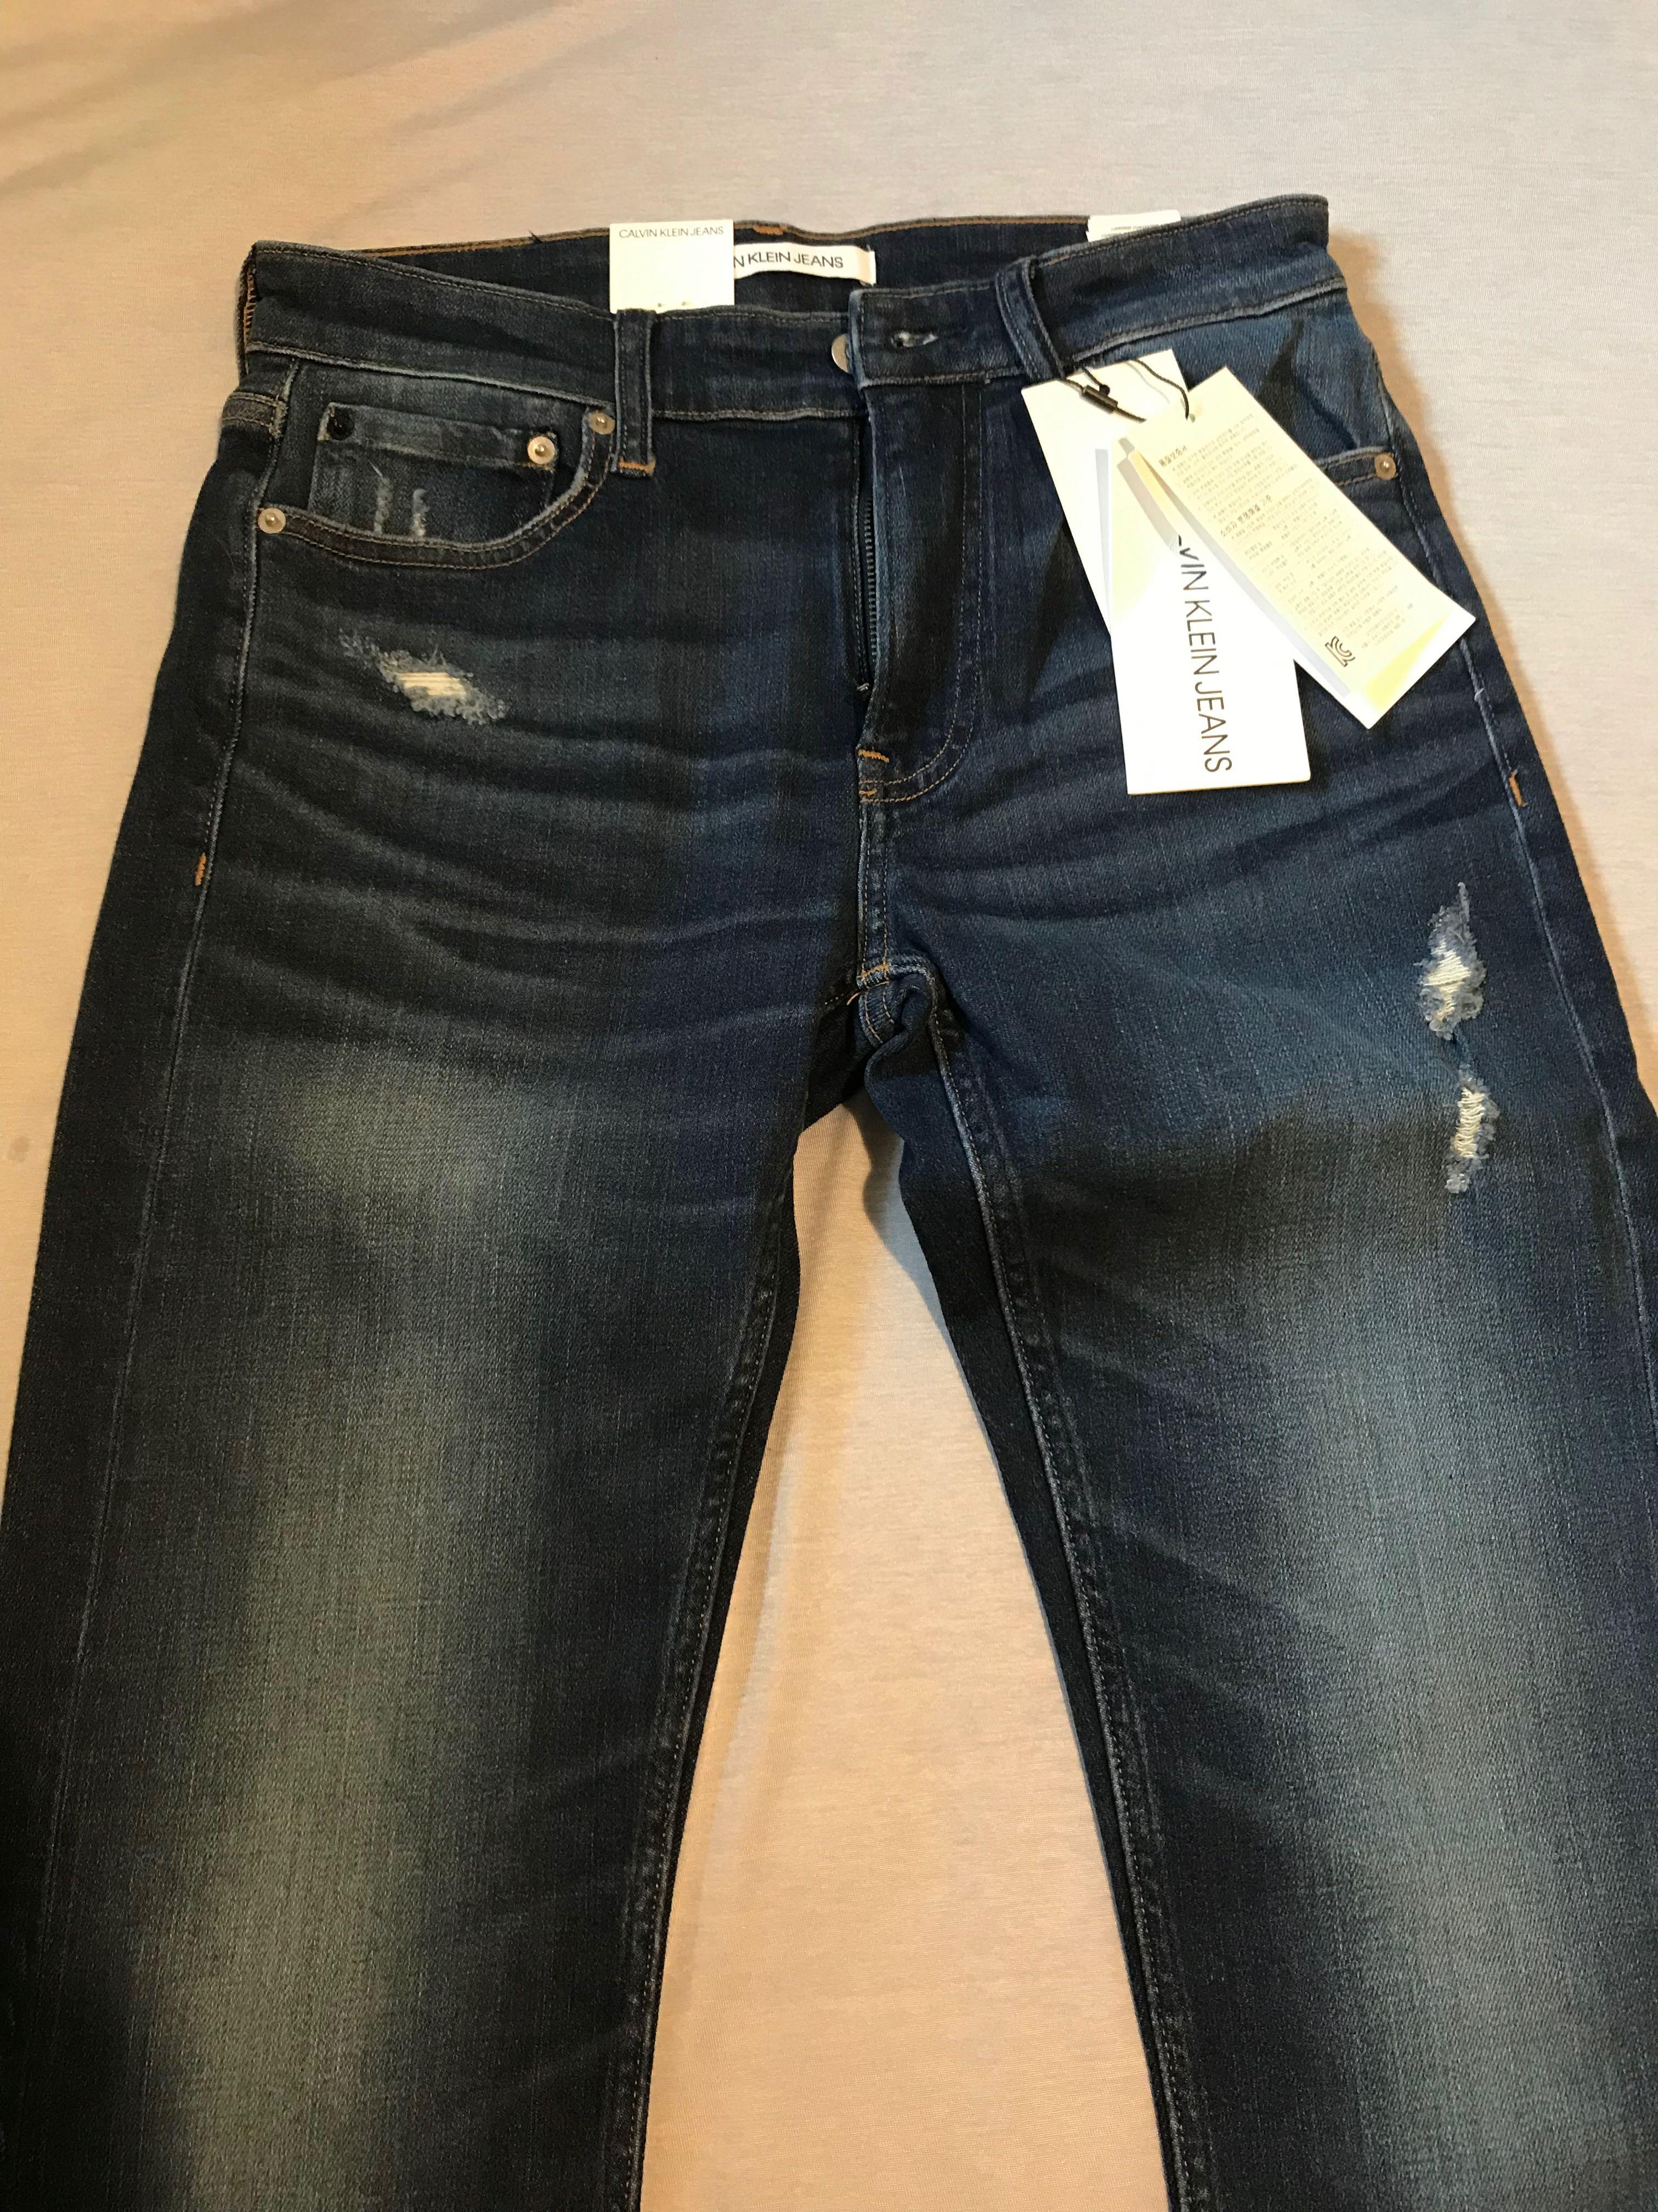 Klein jeans slim CKJ026 29腰牛仔褲, 男裝, 牛仔褲- Carousell